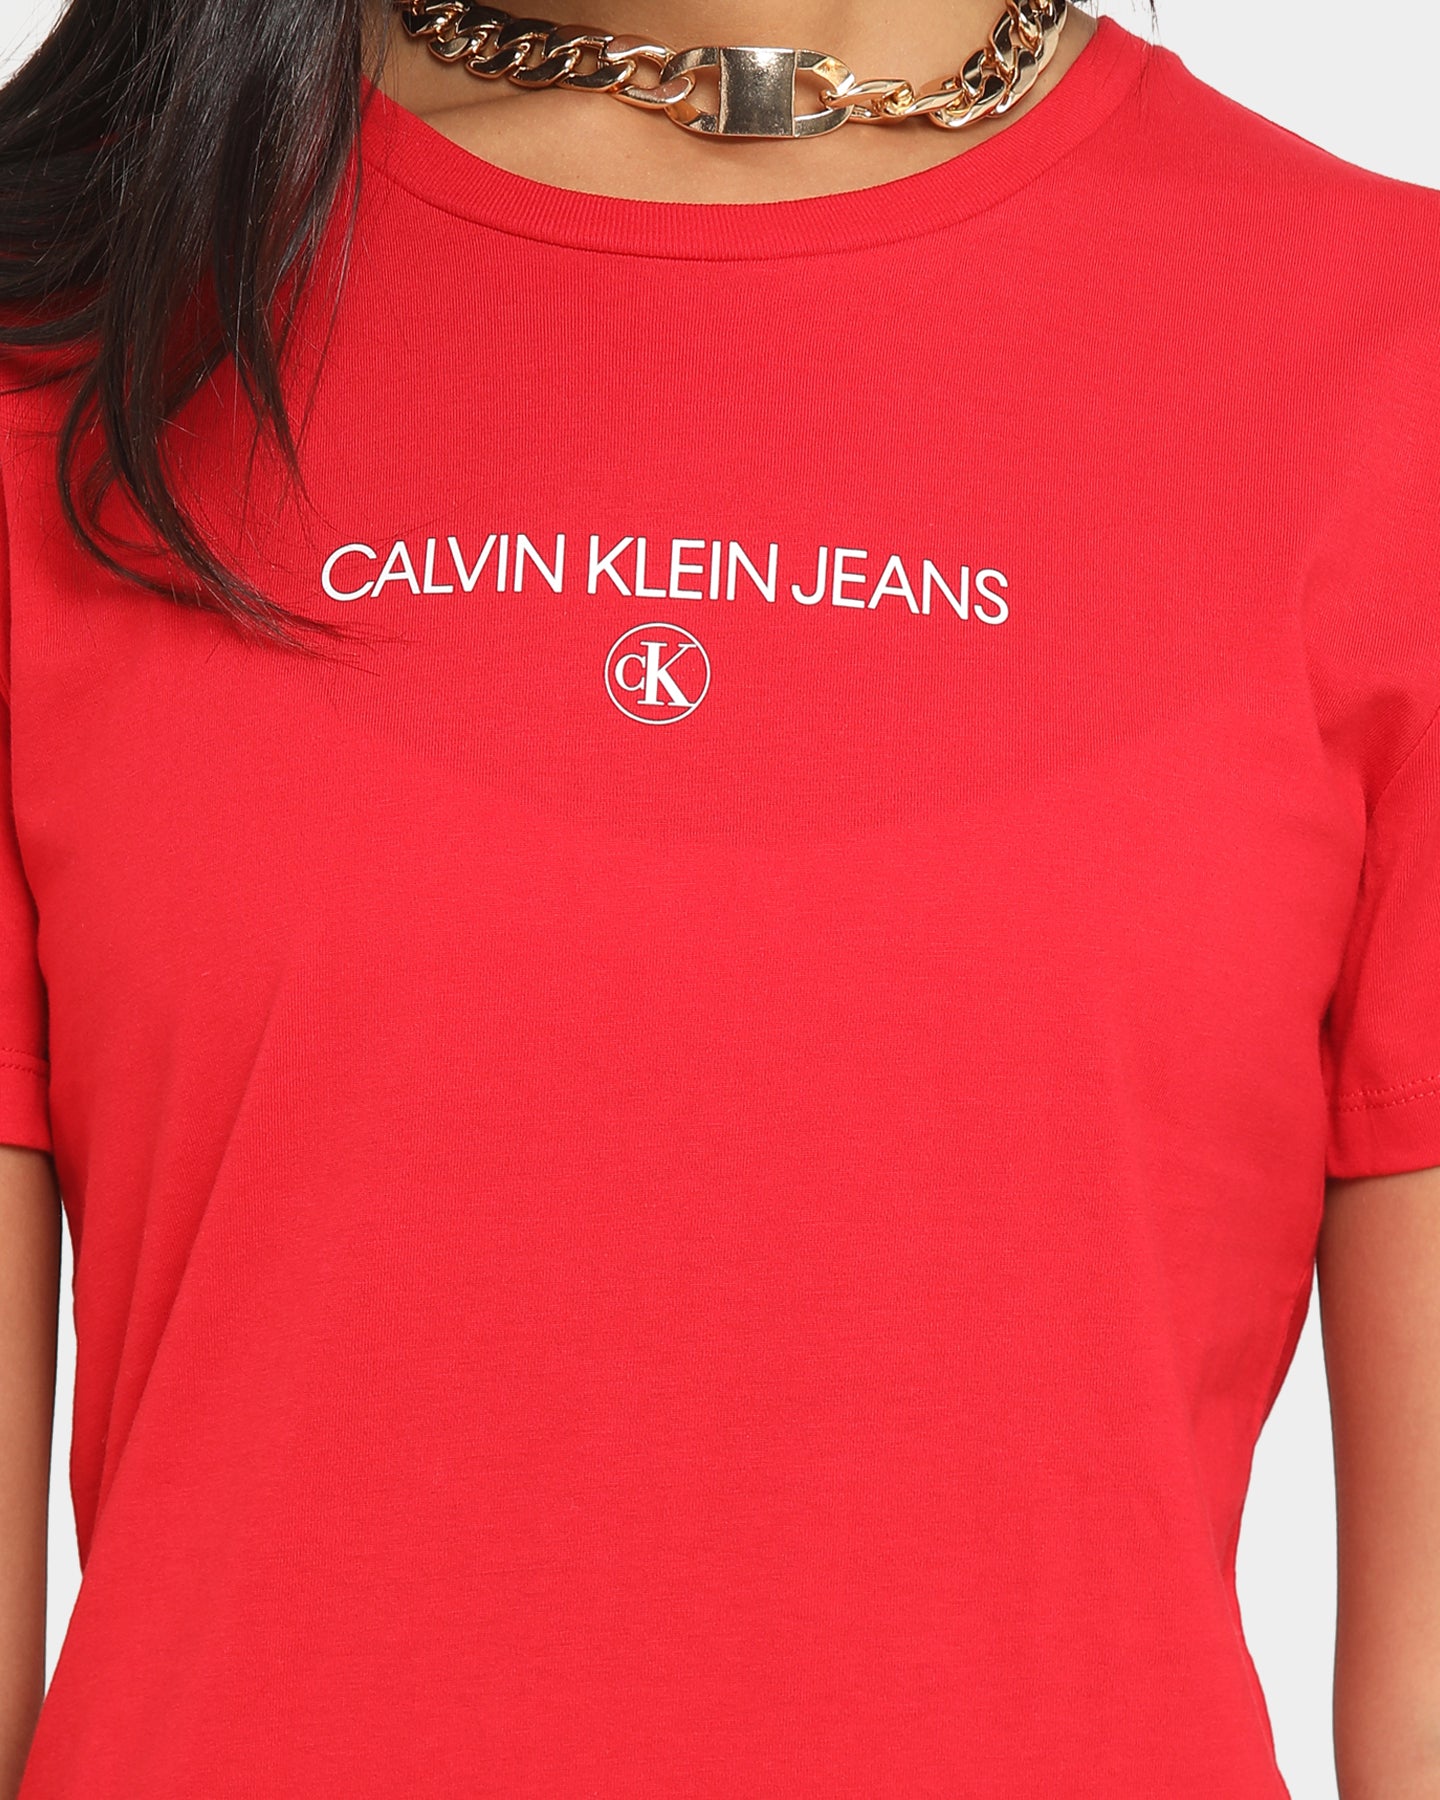 calvin klein red t shirt womens